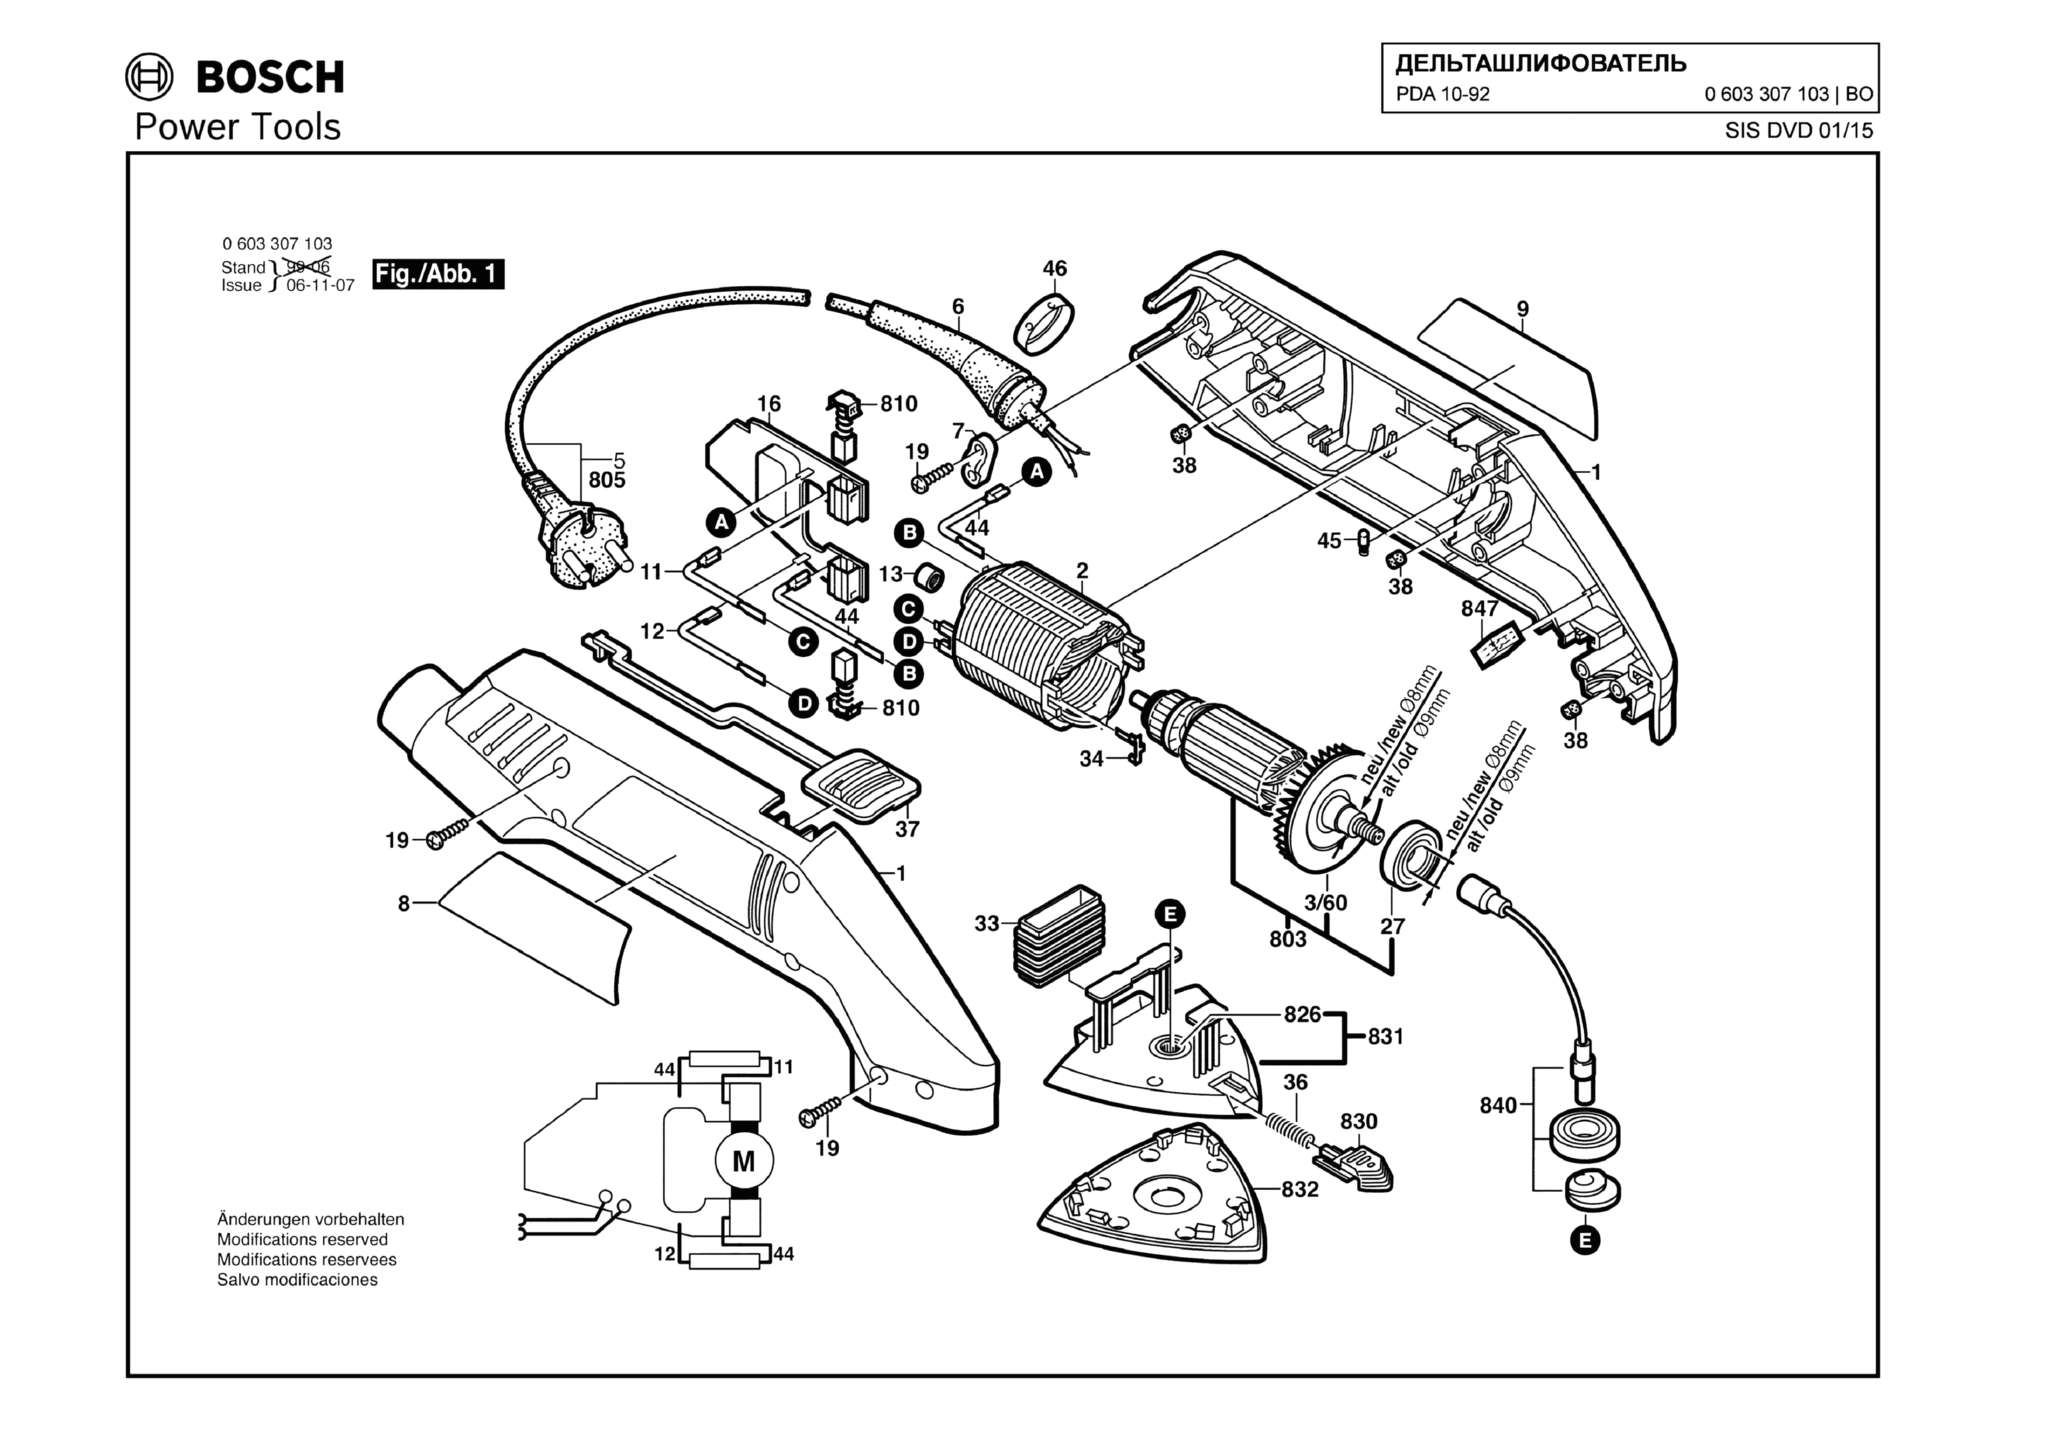 Запчасти, схема и деталировка Bosch PDA 10-92 (ТИП 0603307103)